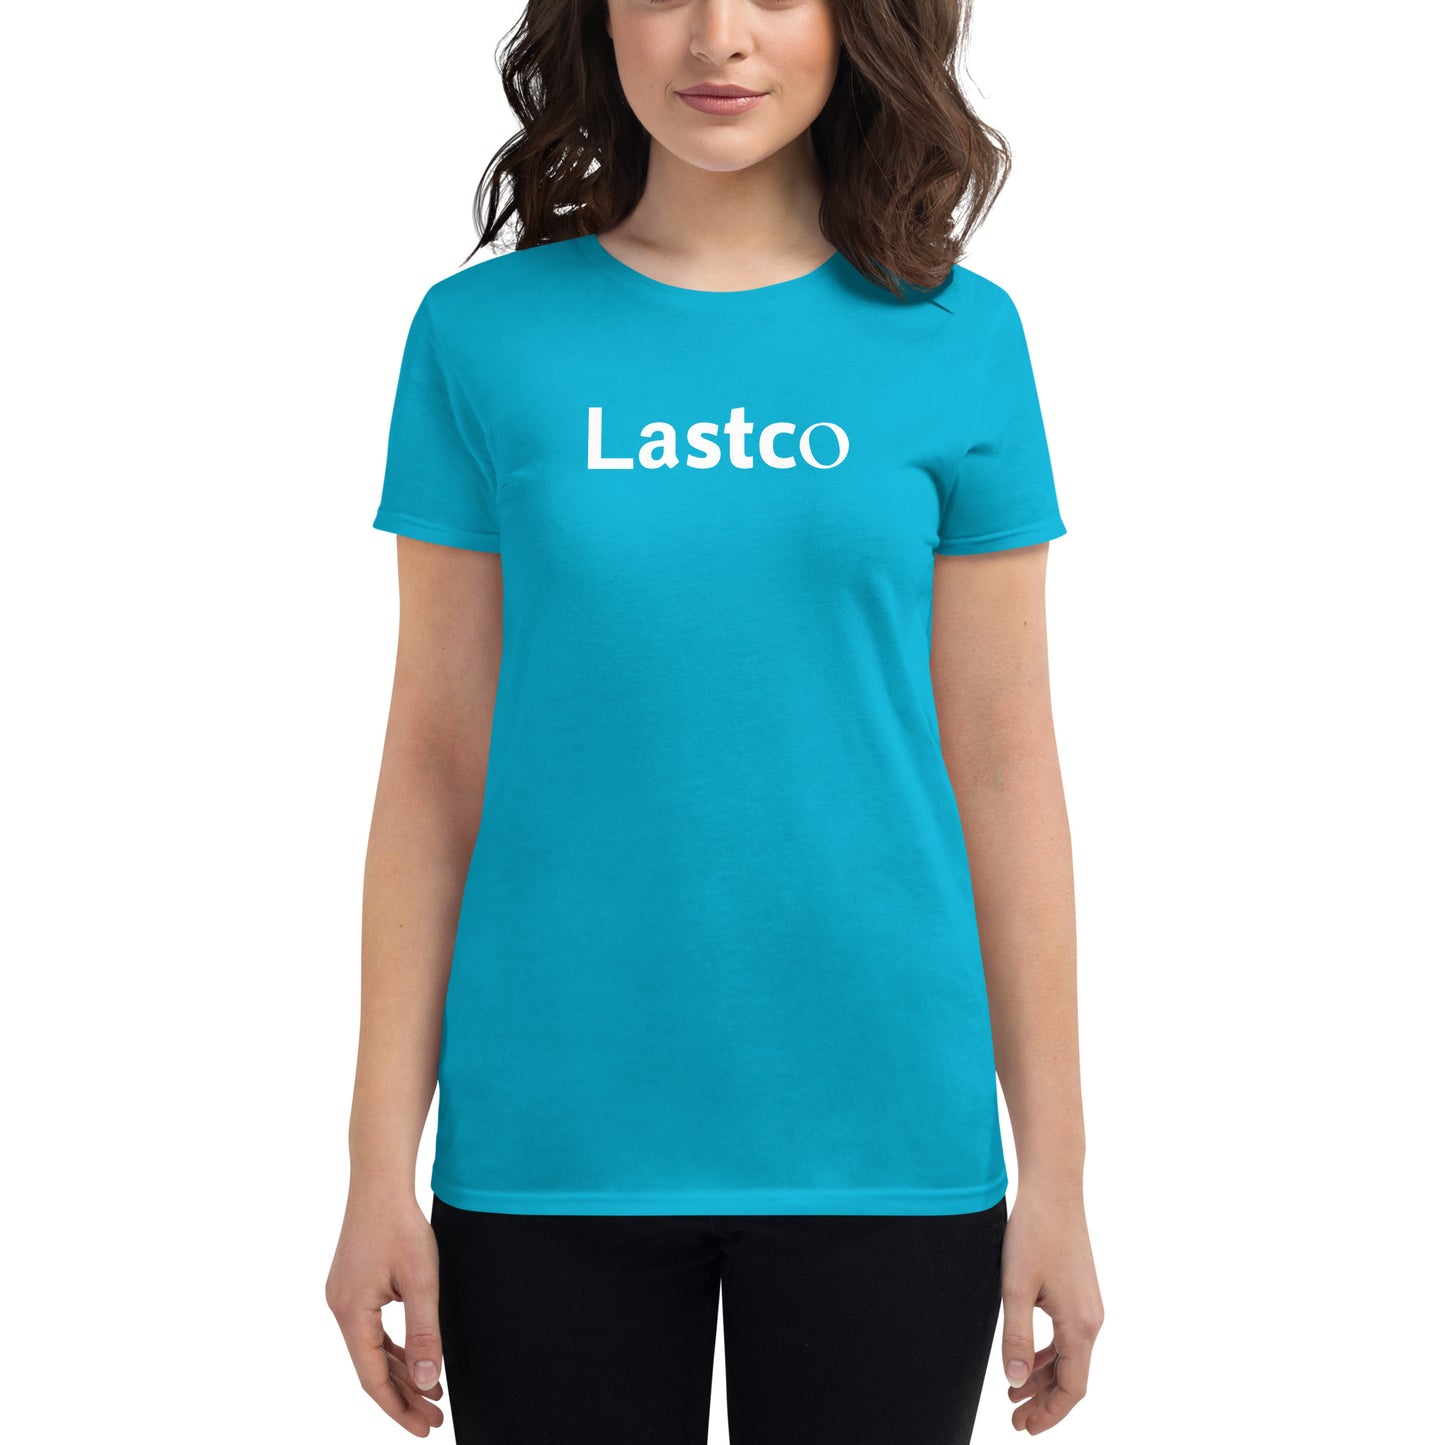 Lastco Mansplaining Repellant Women's short sleeve t-shirt